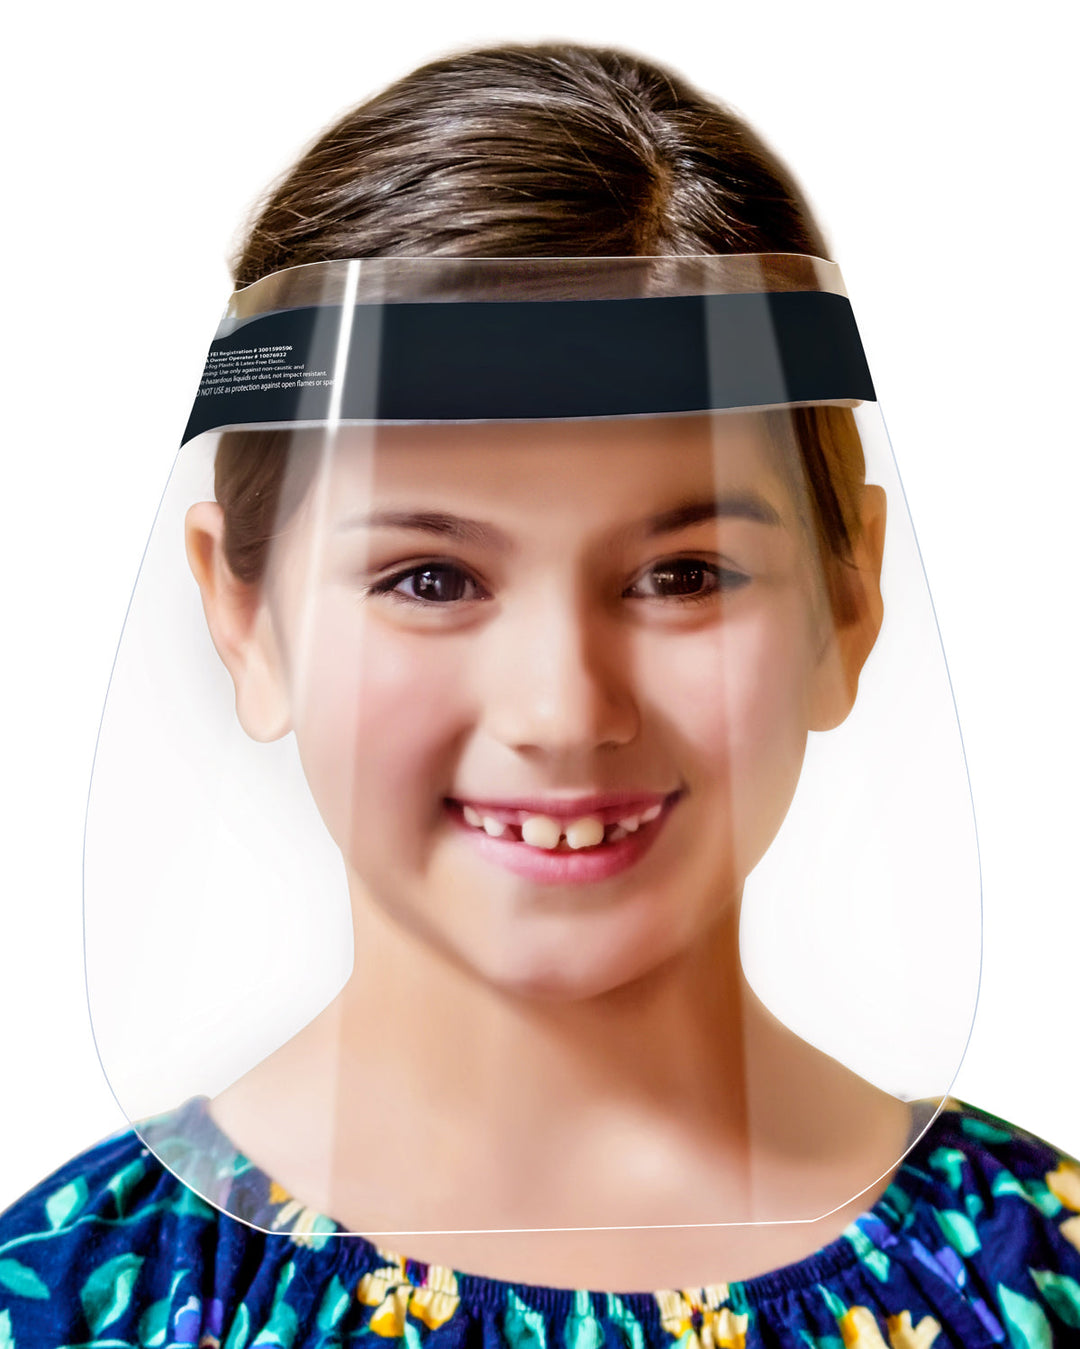 2-Pack Children's Safety Face Shields - Anti-Fog, Anti-Static, Hypoallergenic